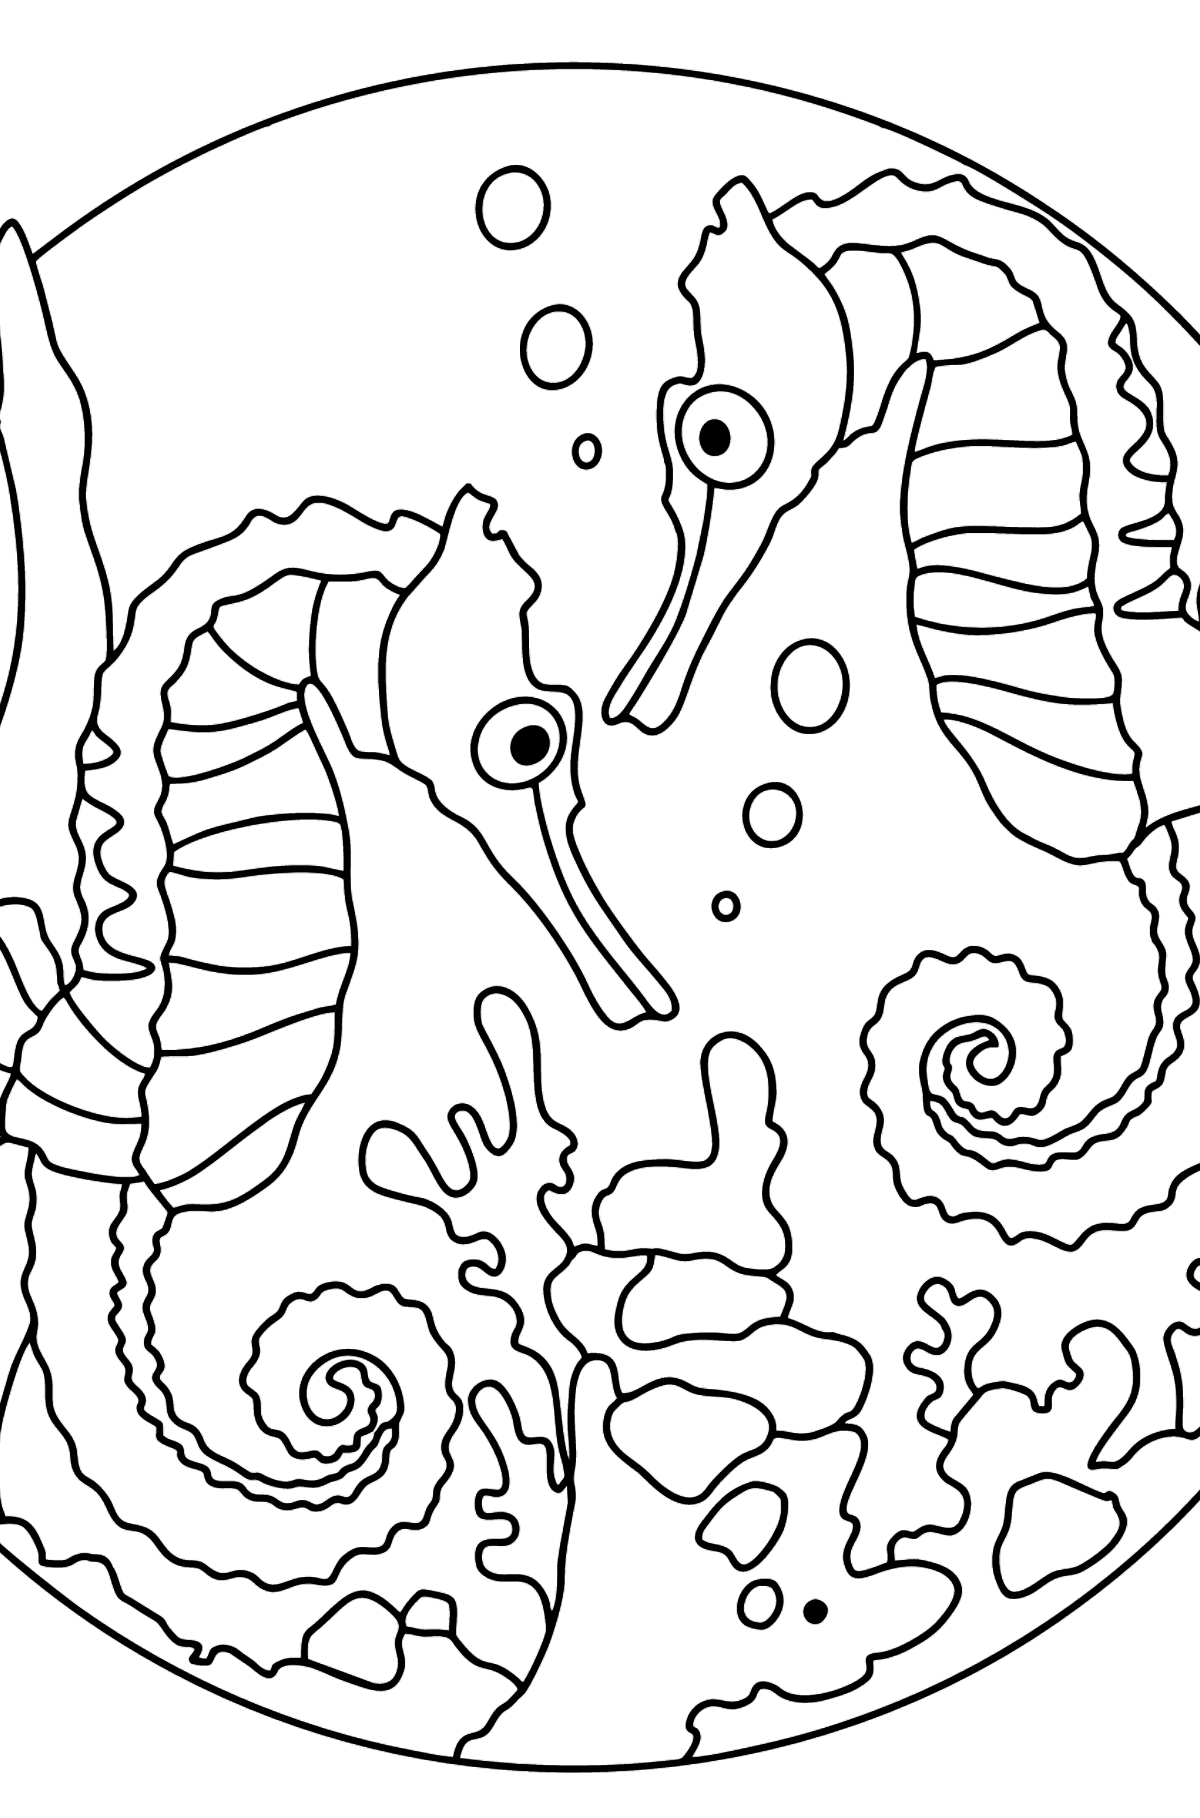 Dibujo para colorear Caballitos de mar - Dibujos para Colorear para Niños